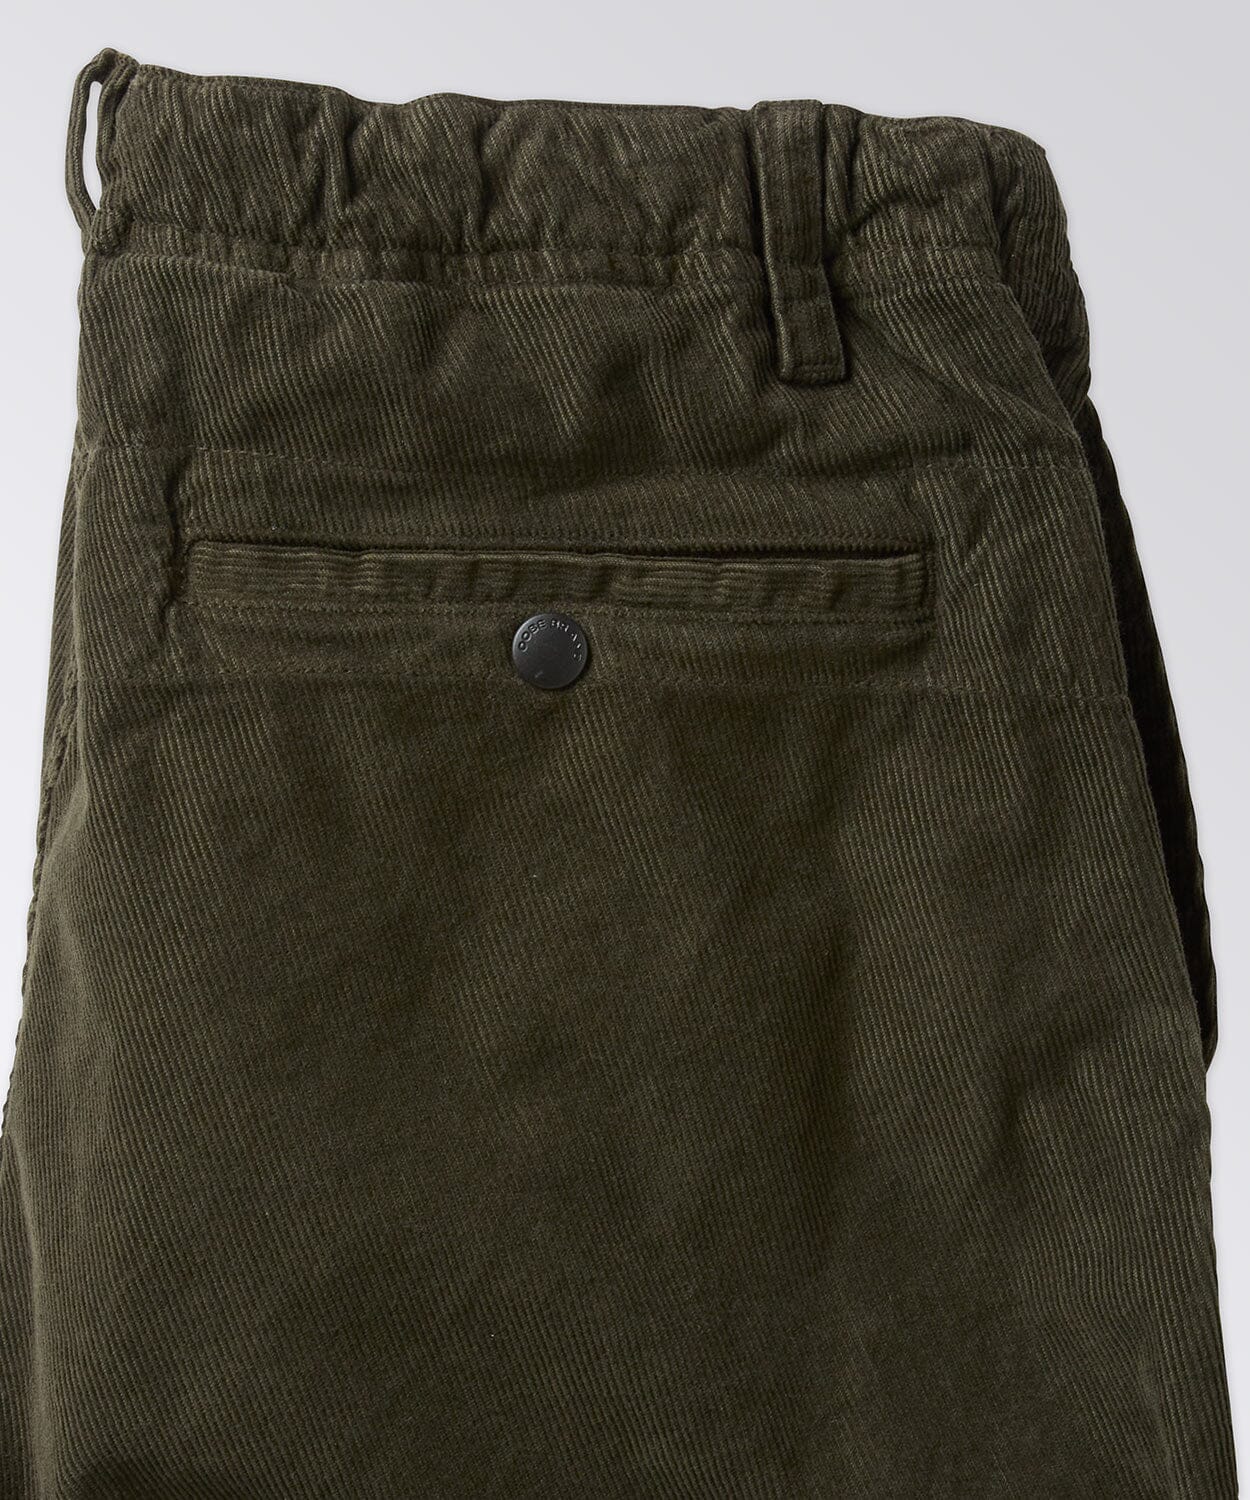 details of corduroy pants for men